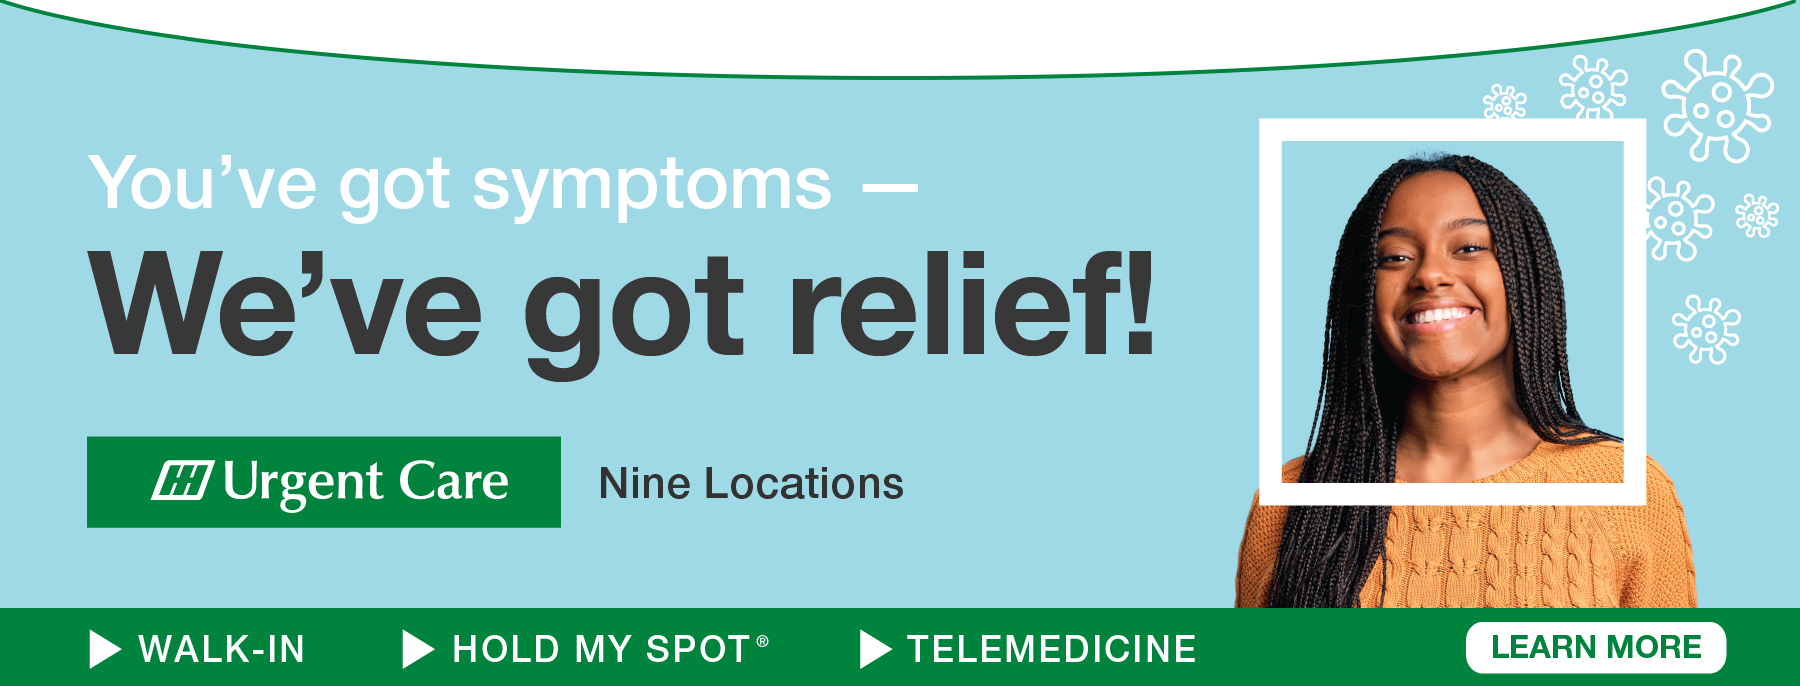 You've got symptoms -- We've got relief! HH Urgent Care